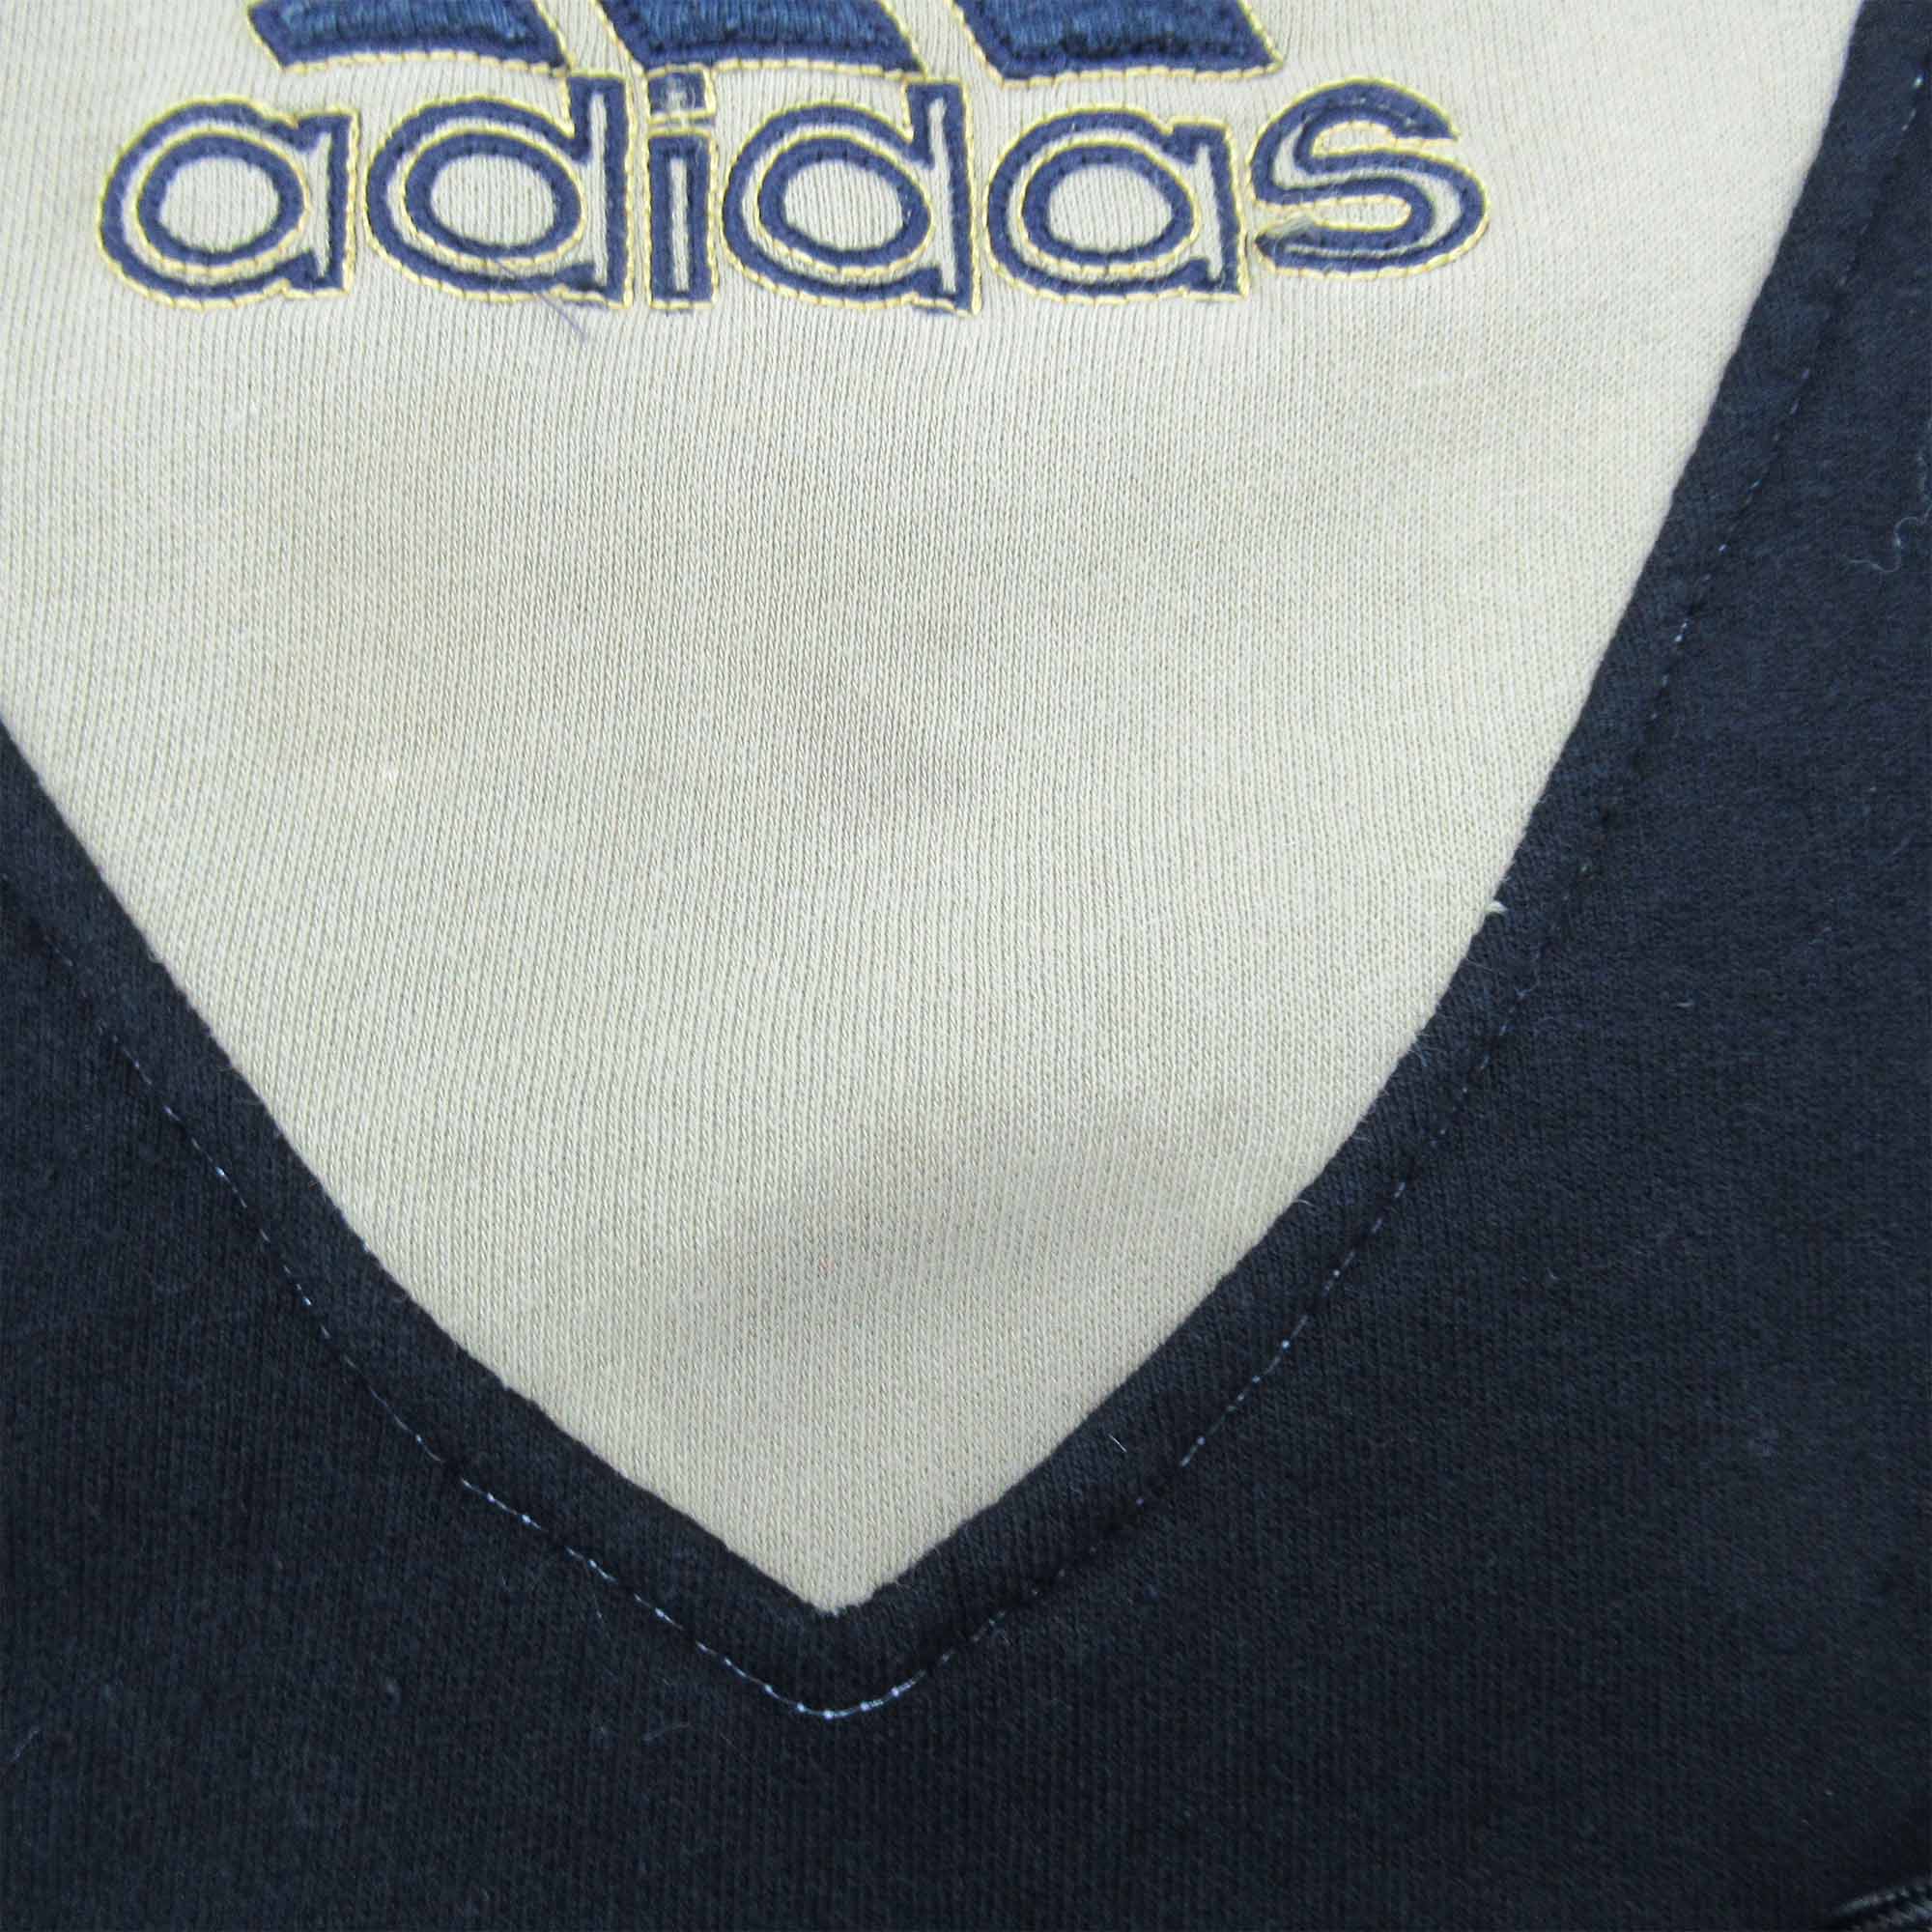 Adidas Rework Sweatshirt -  M